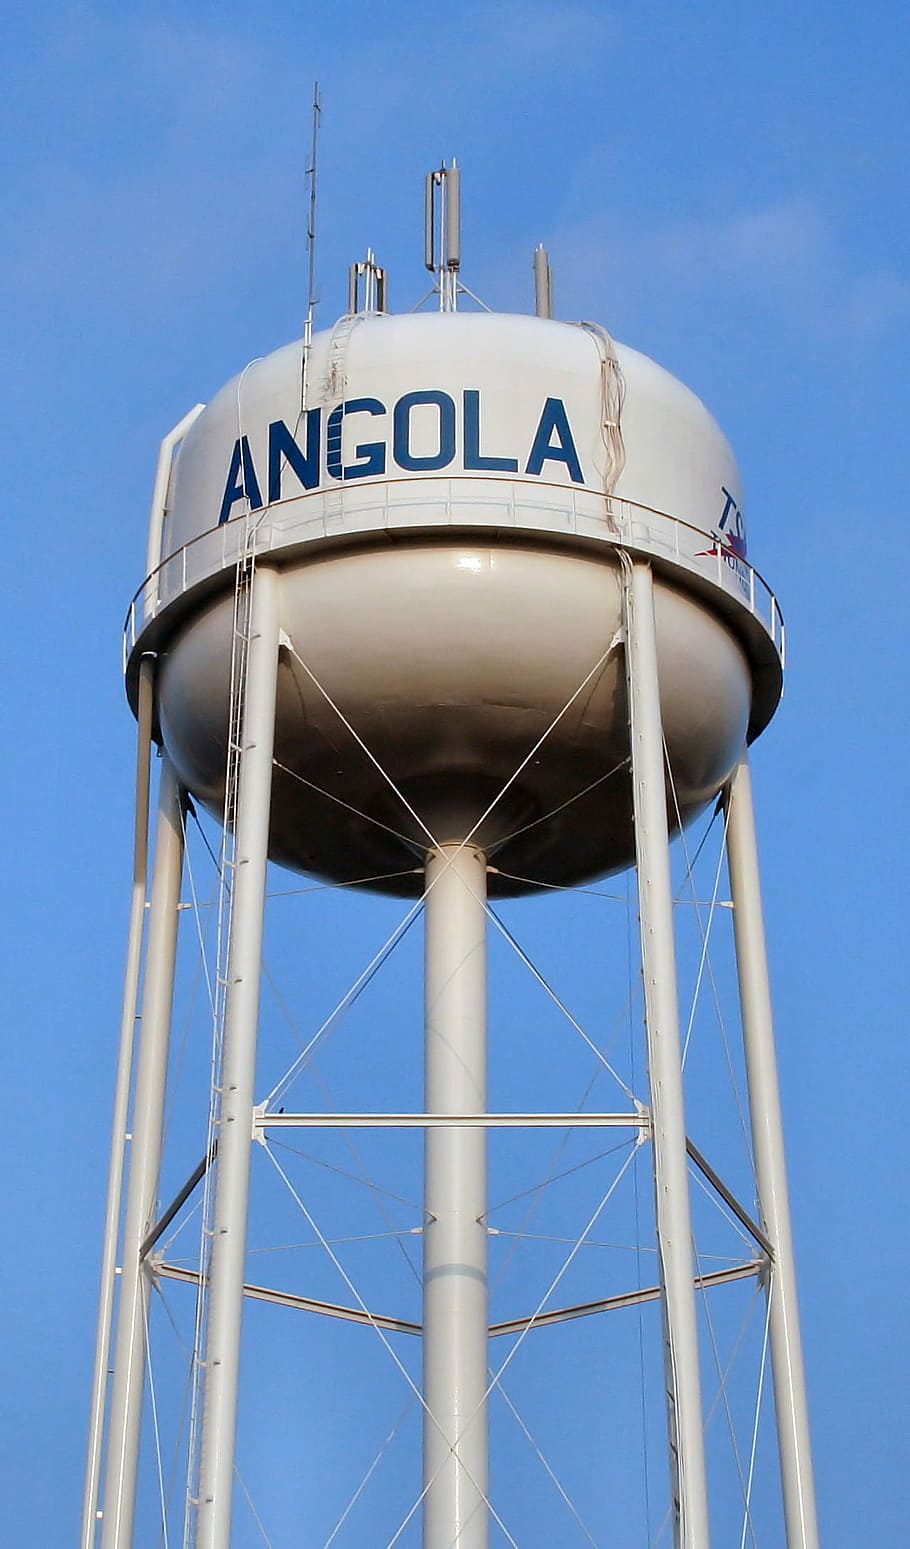 menara air angola, Angola, Menara Air, Indiana, domain publik, struktur, Menara air - Tangki Penyimpanan, biru, menara, langit